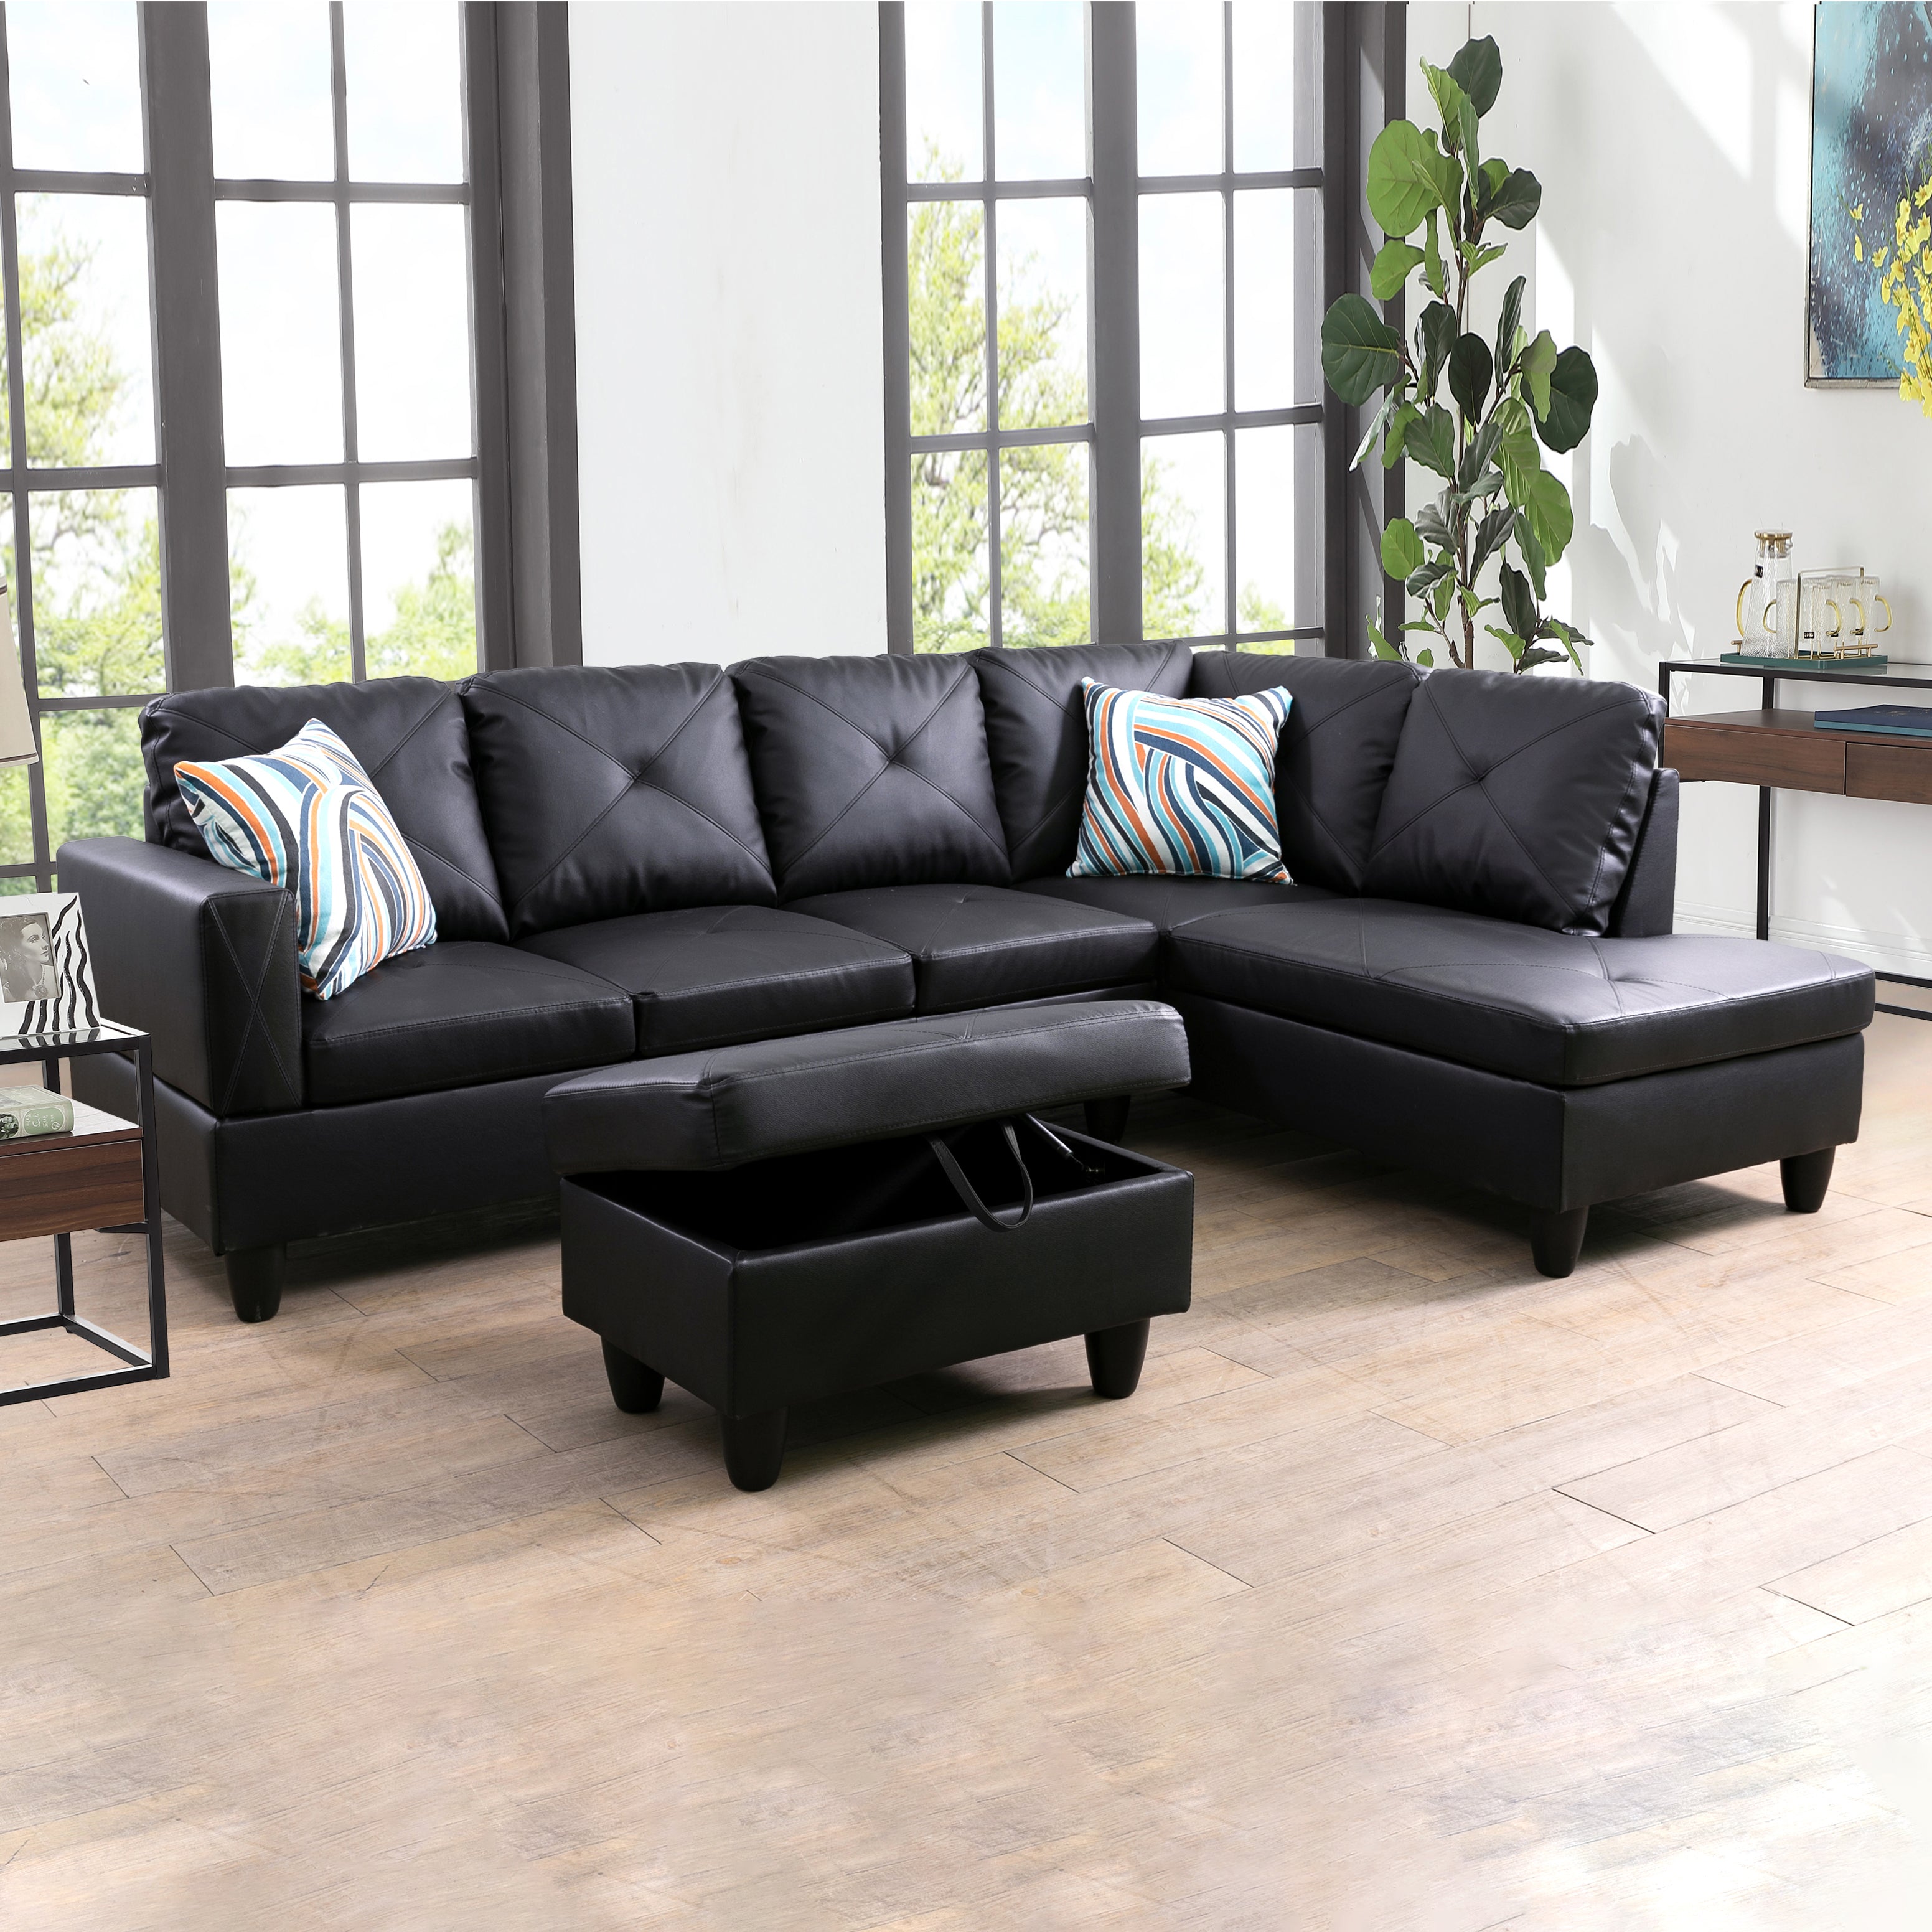 Ainehome Black L-Shaped Faux Leather Sofa Set